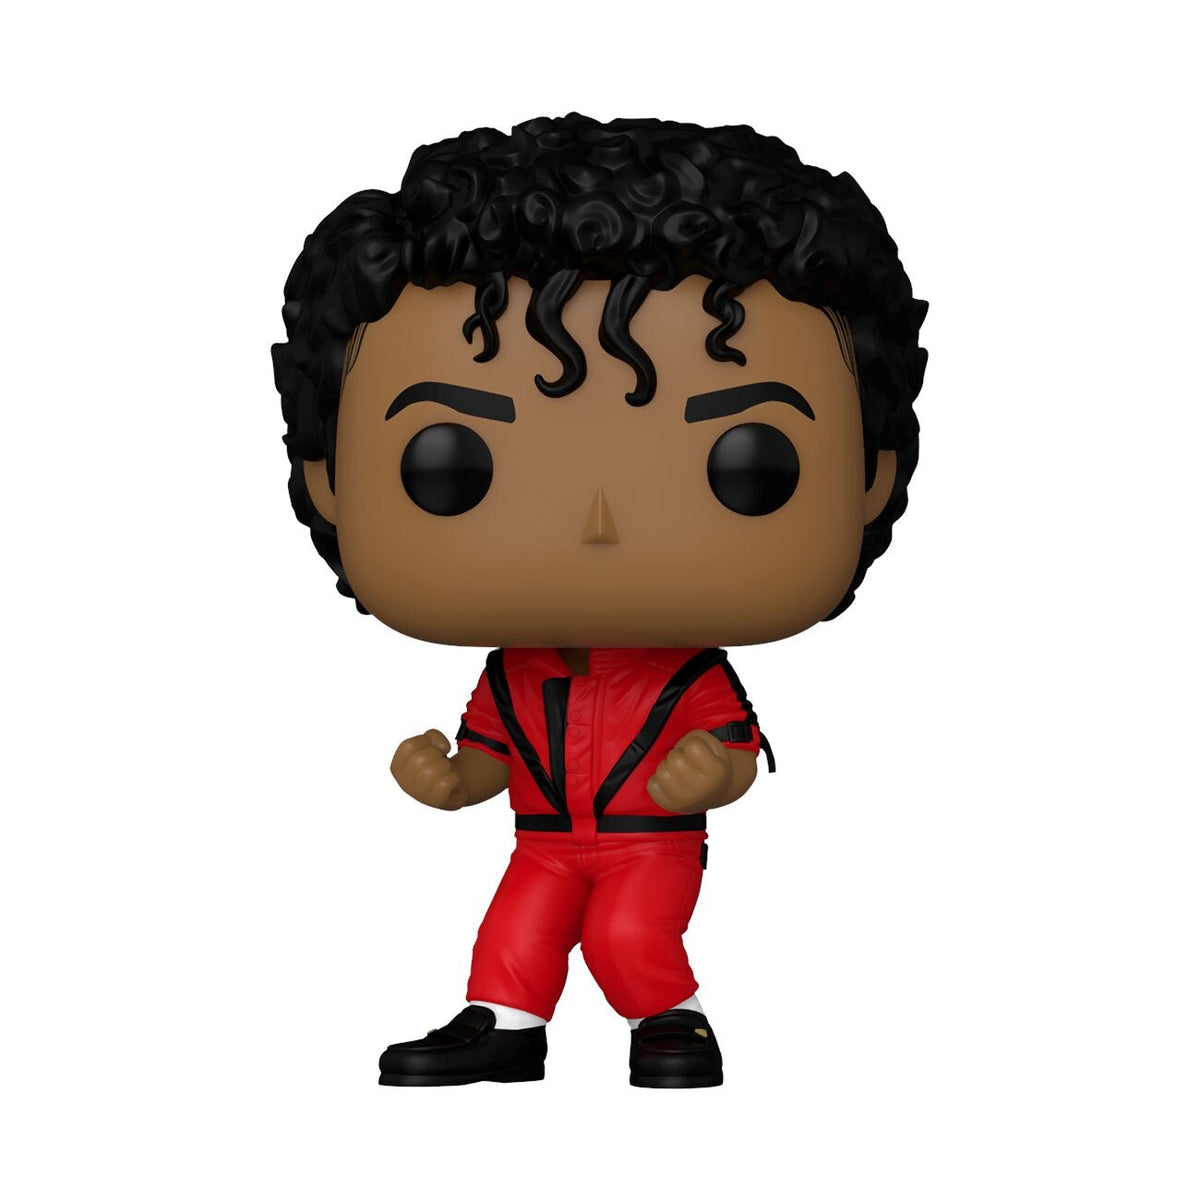 Funko Pop! Rocks: Michael Jackson (Thriller) #359 Vinyl Figure